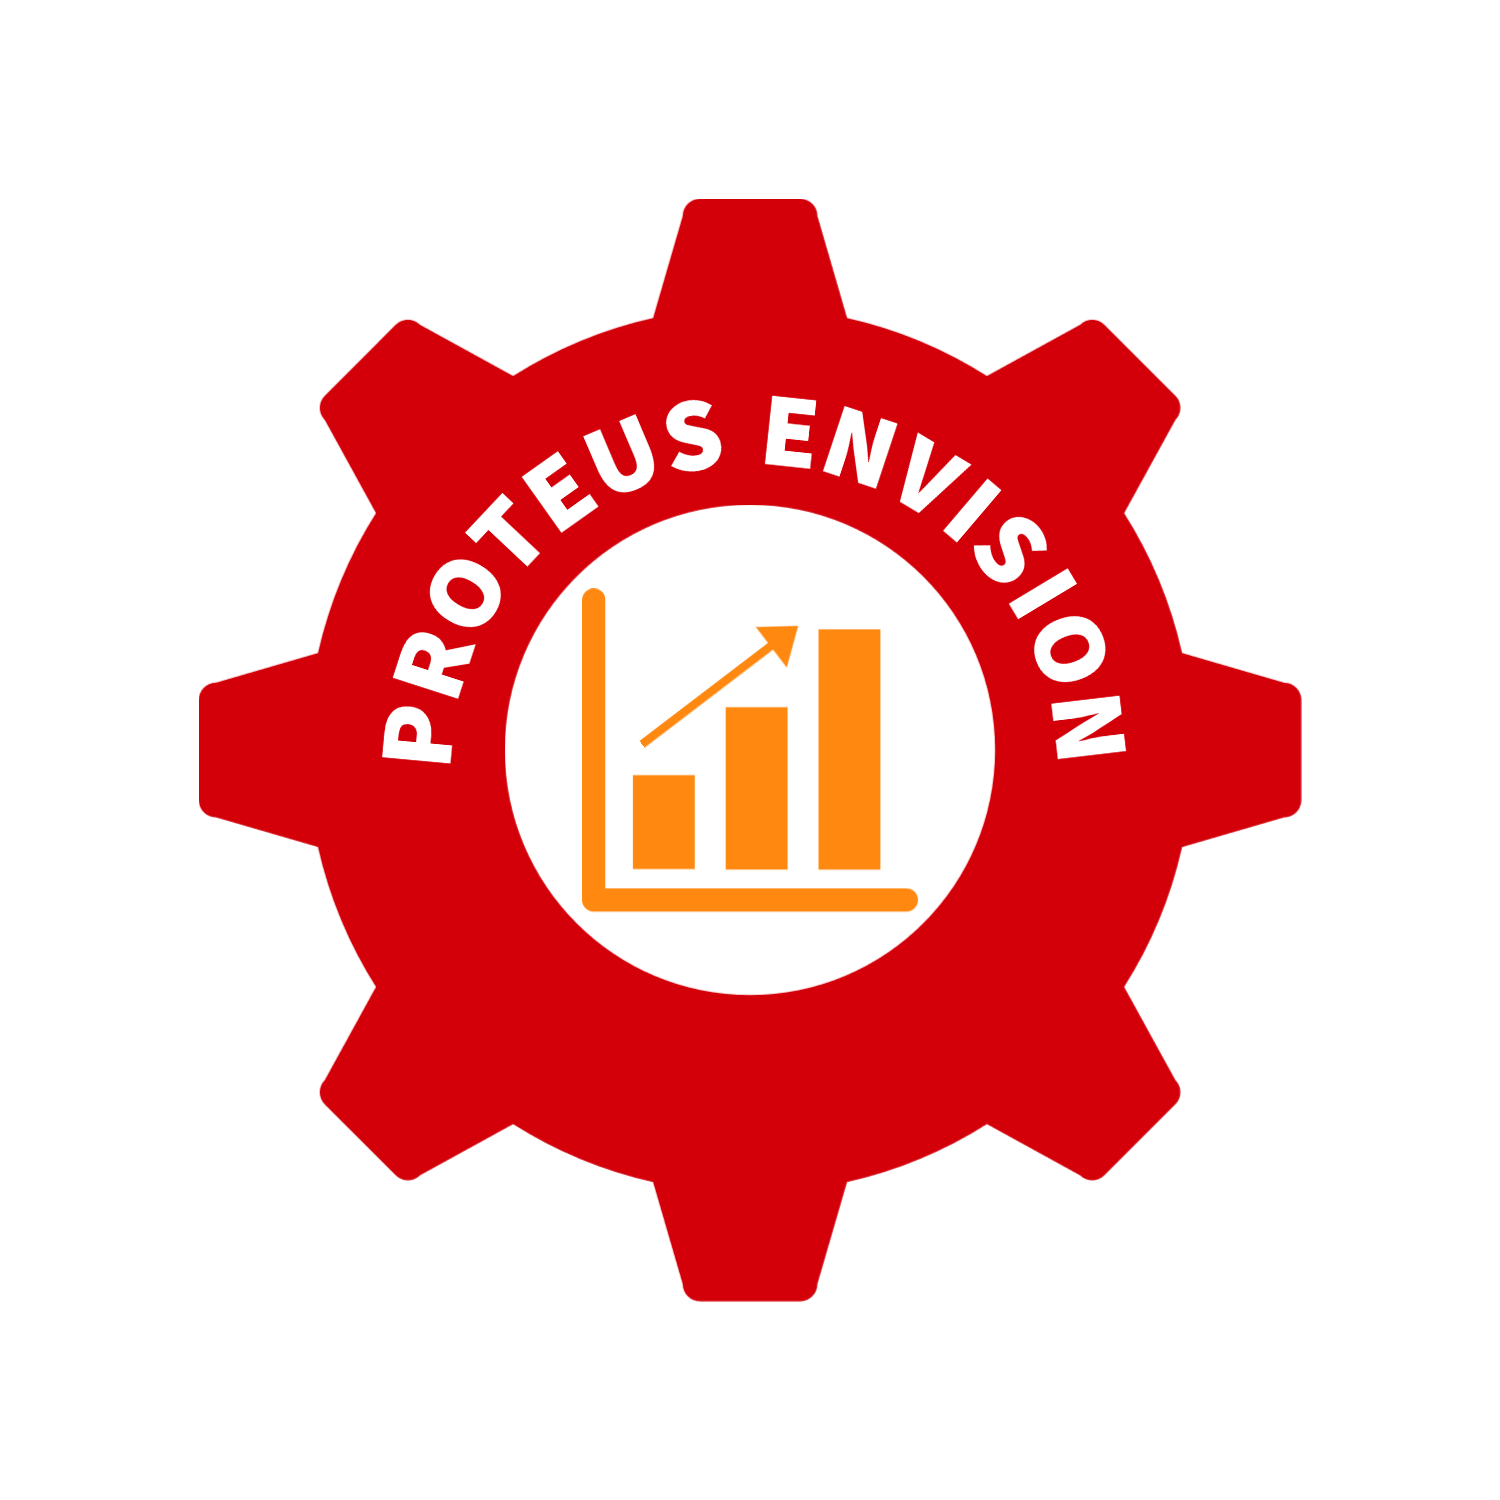 Proteus Envision gear logo-crop